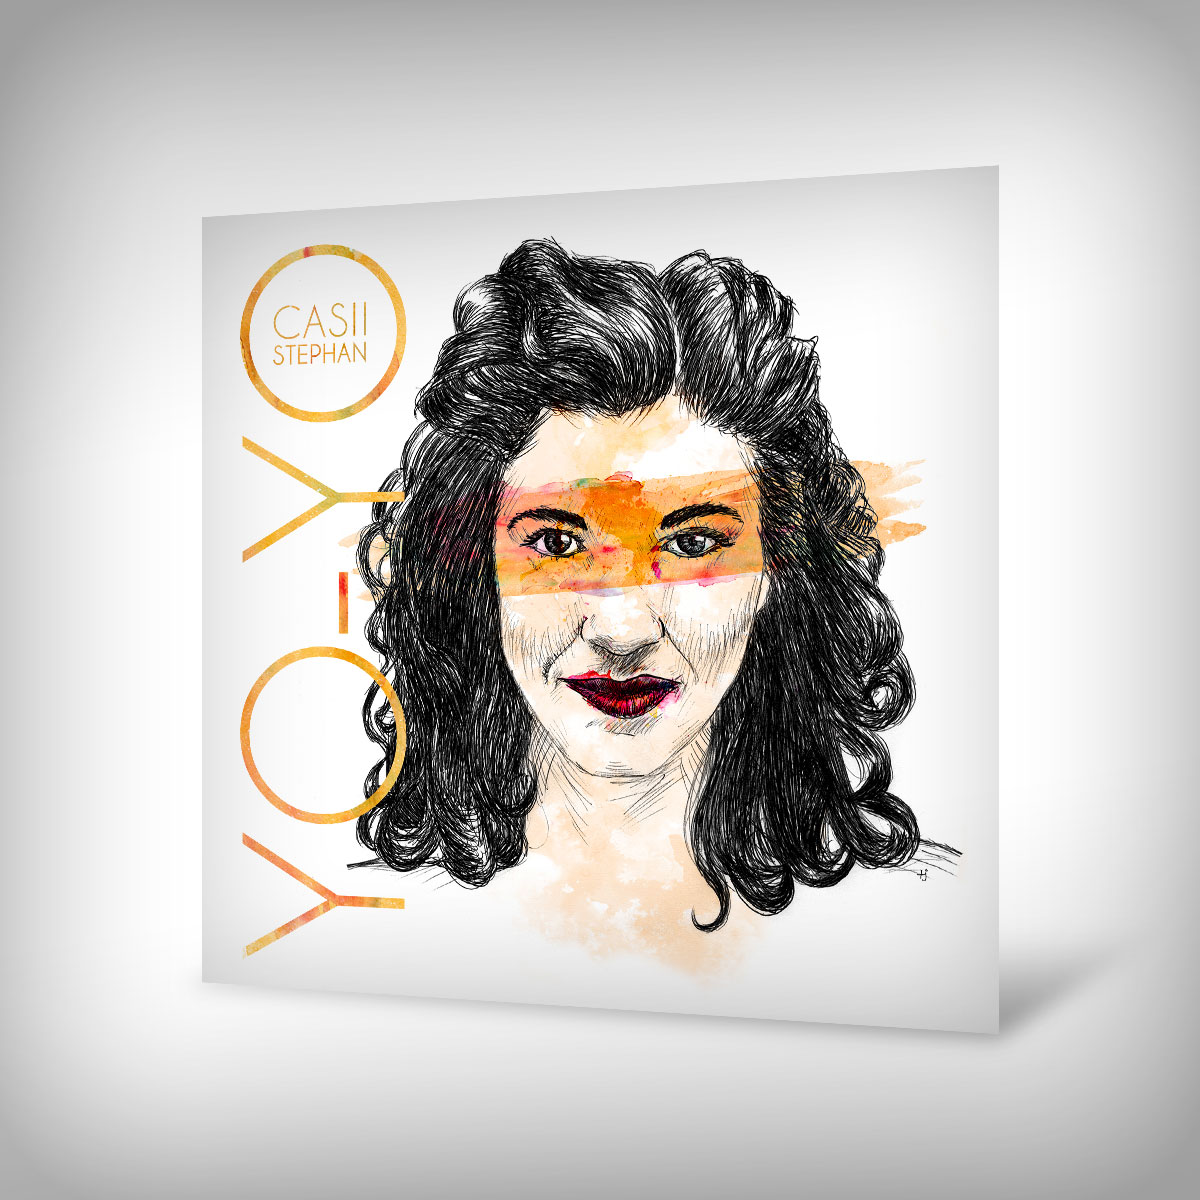 Casii YoYo CD Cover